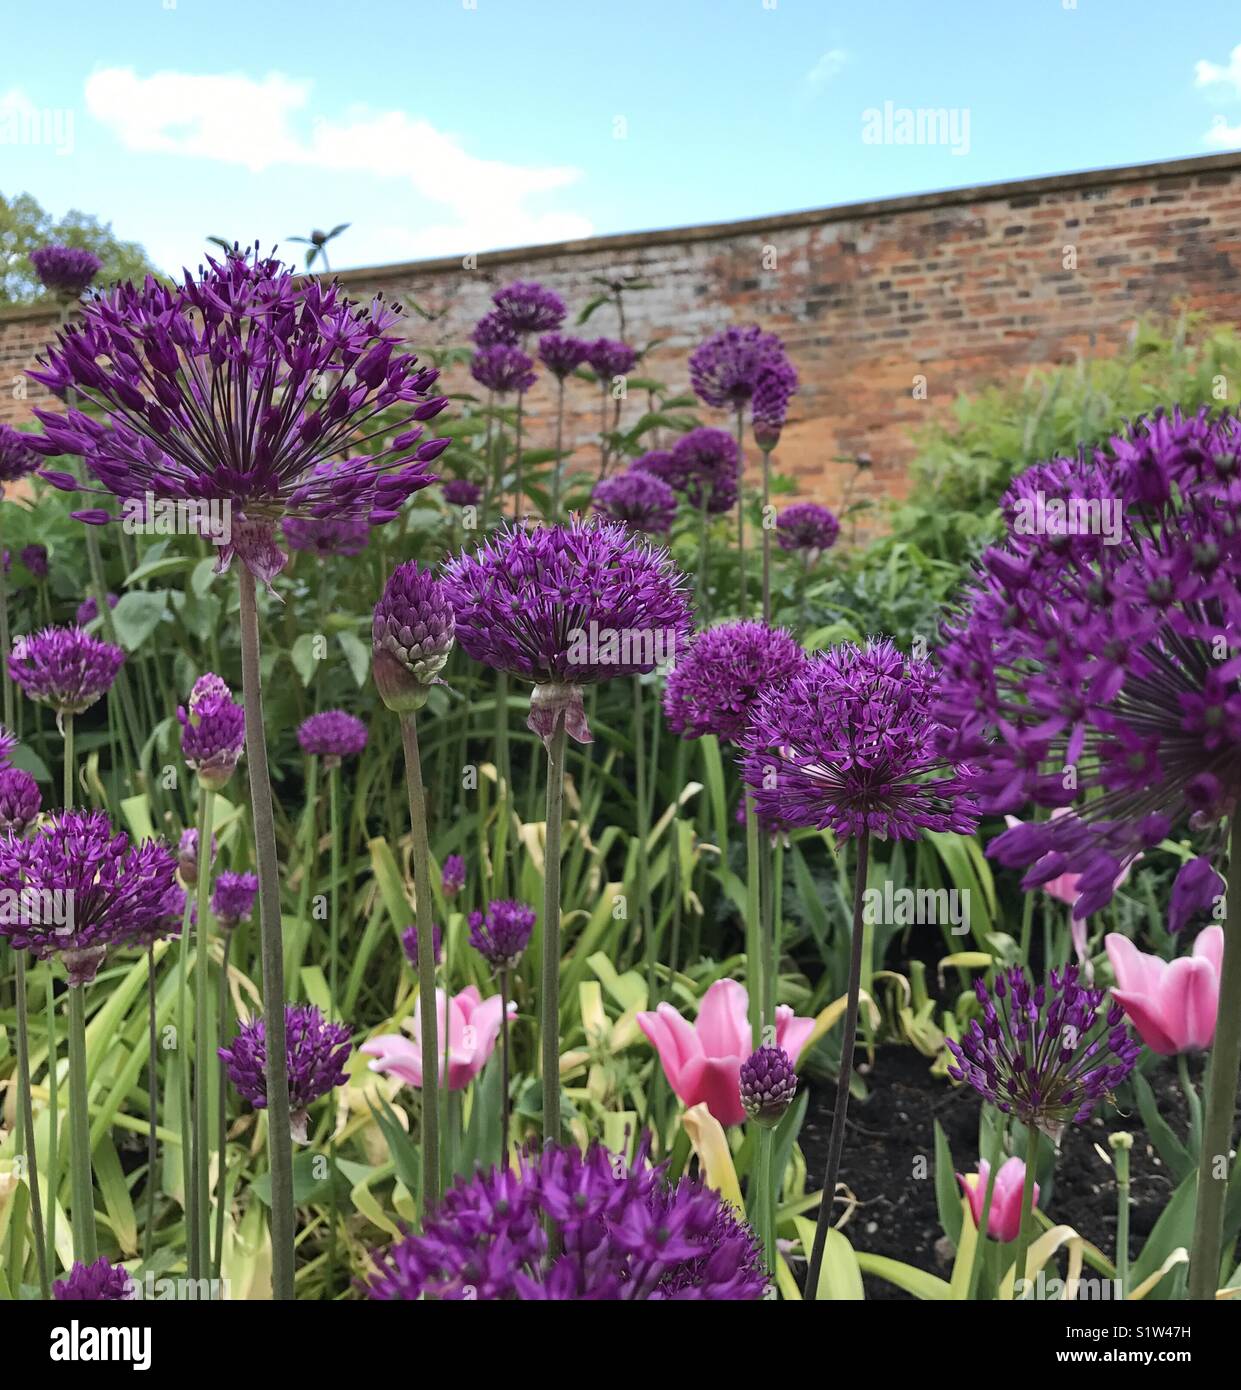 Allium flowers in English walled garden Stock Photo